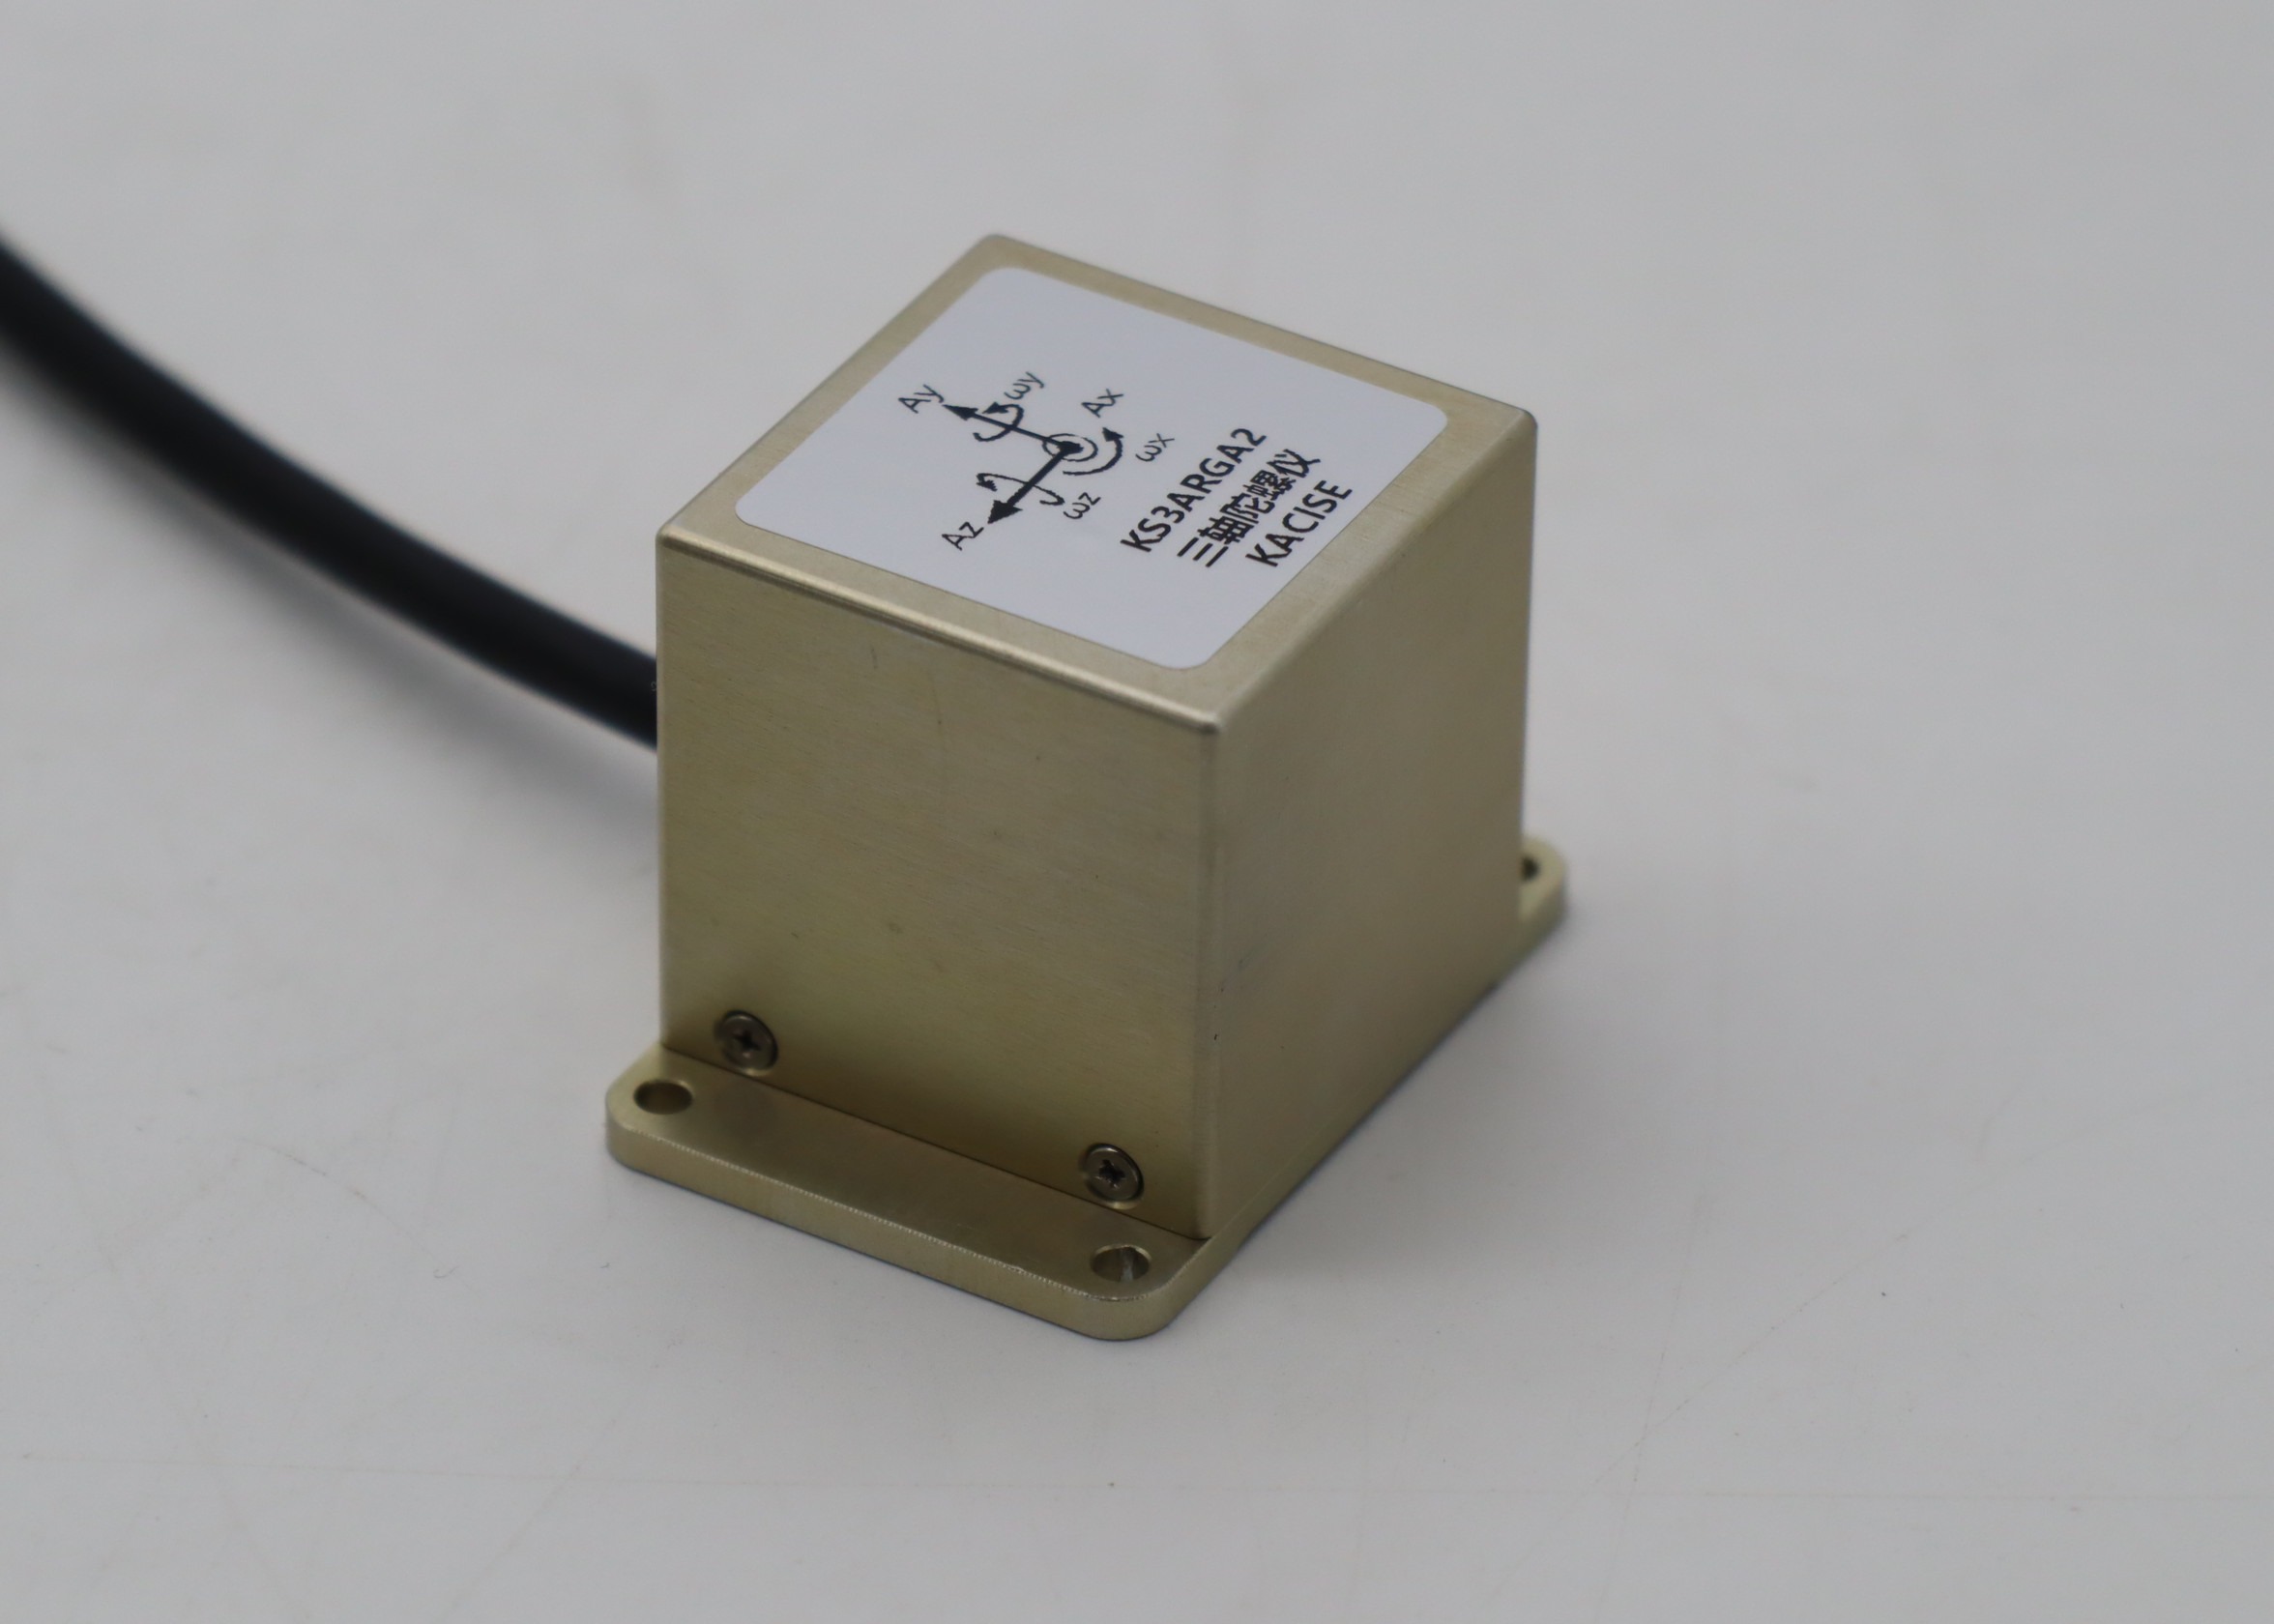 Sensor giroscópico de salida analógica de arranque rápido MEMS con voltaje de desplazamiento de 1,65 ± 0,02 V